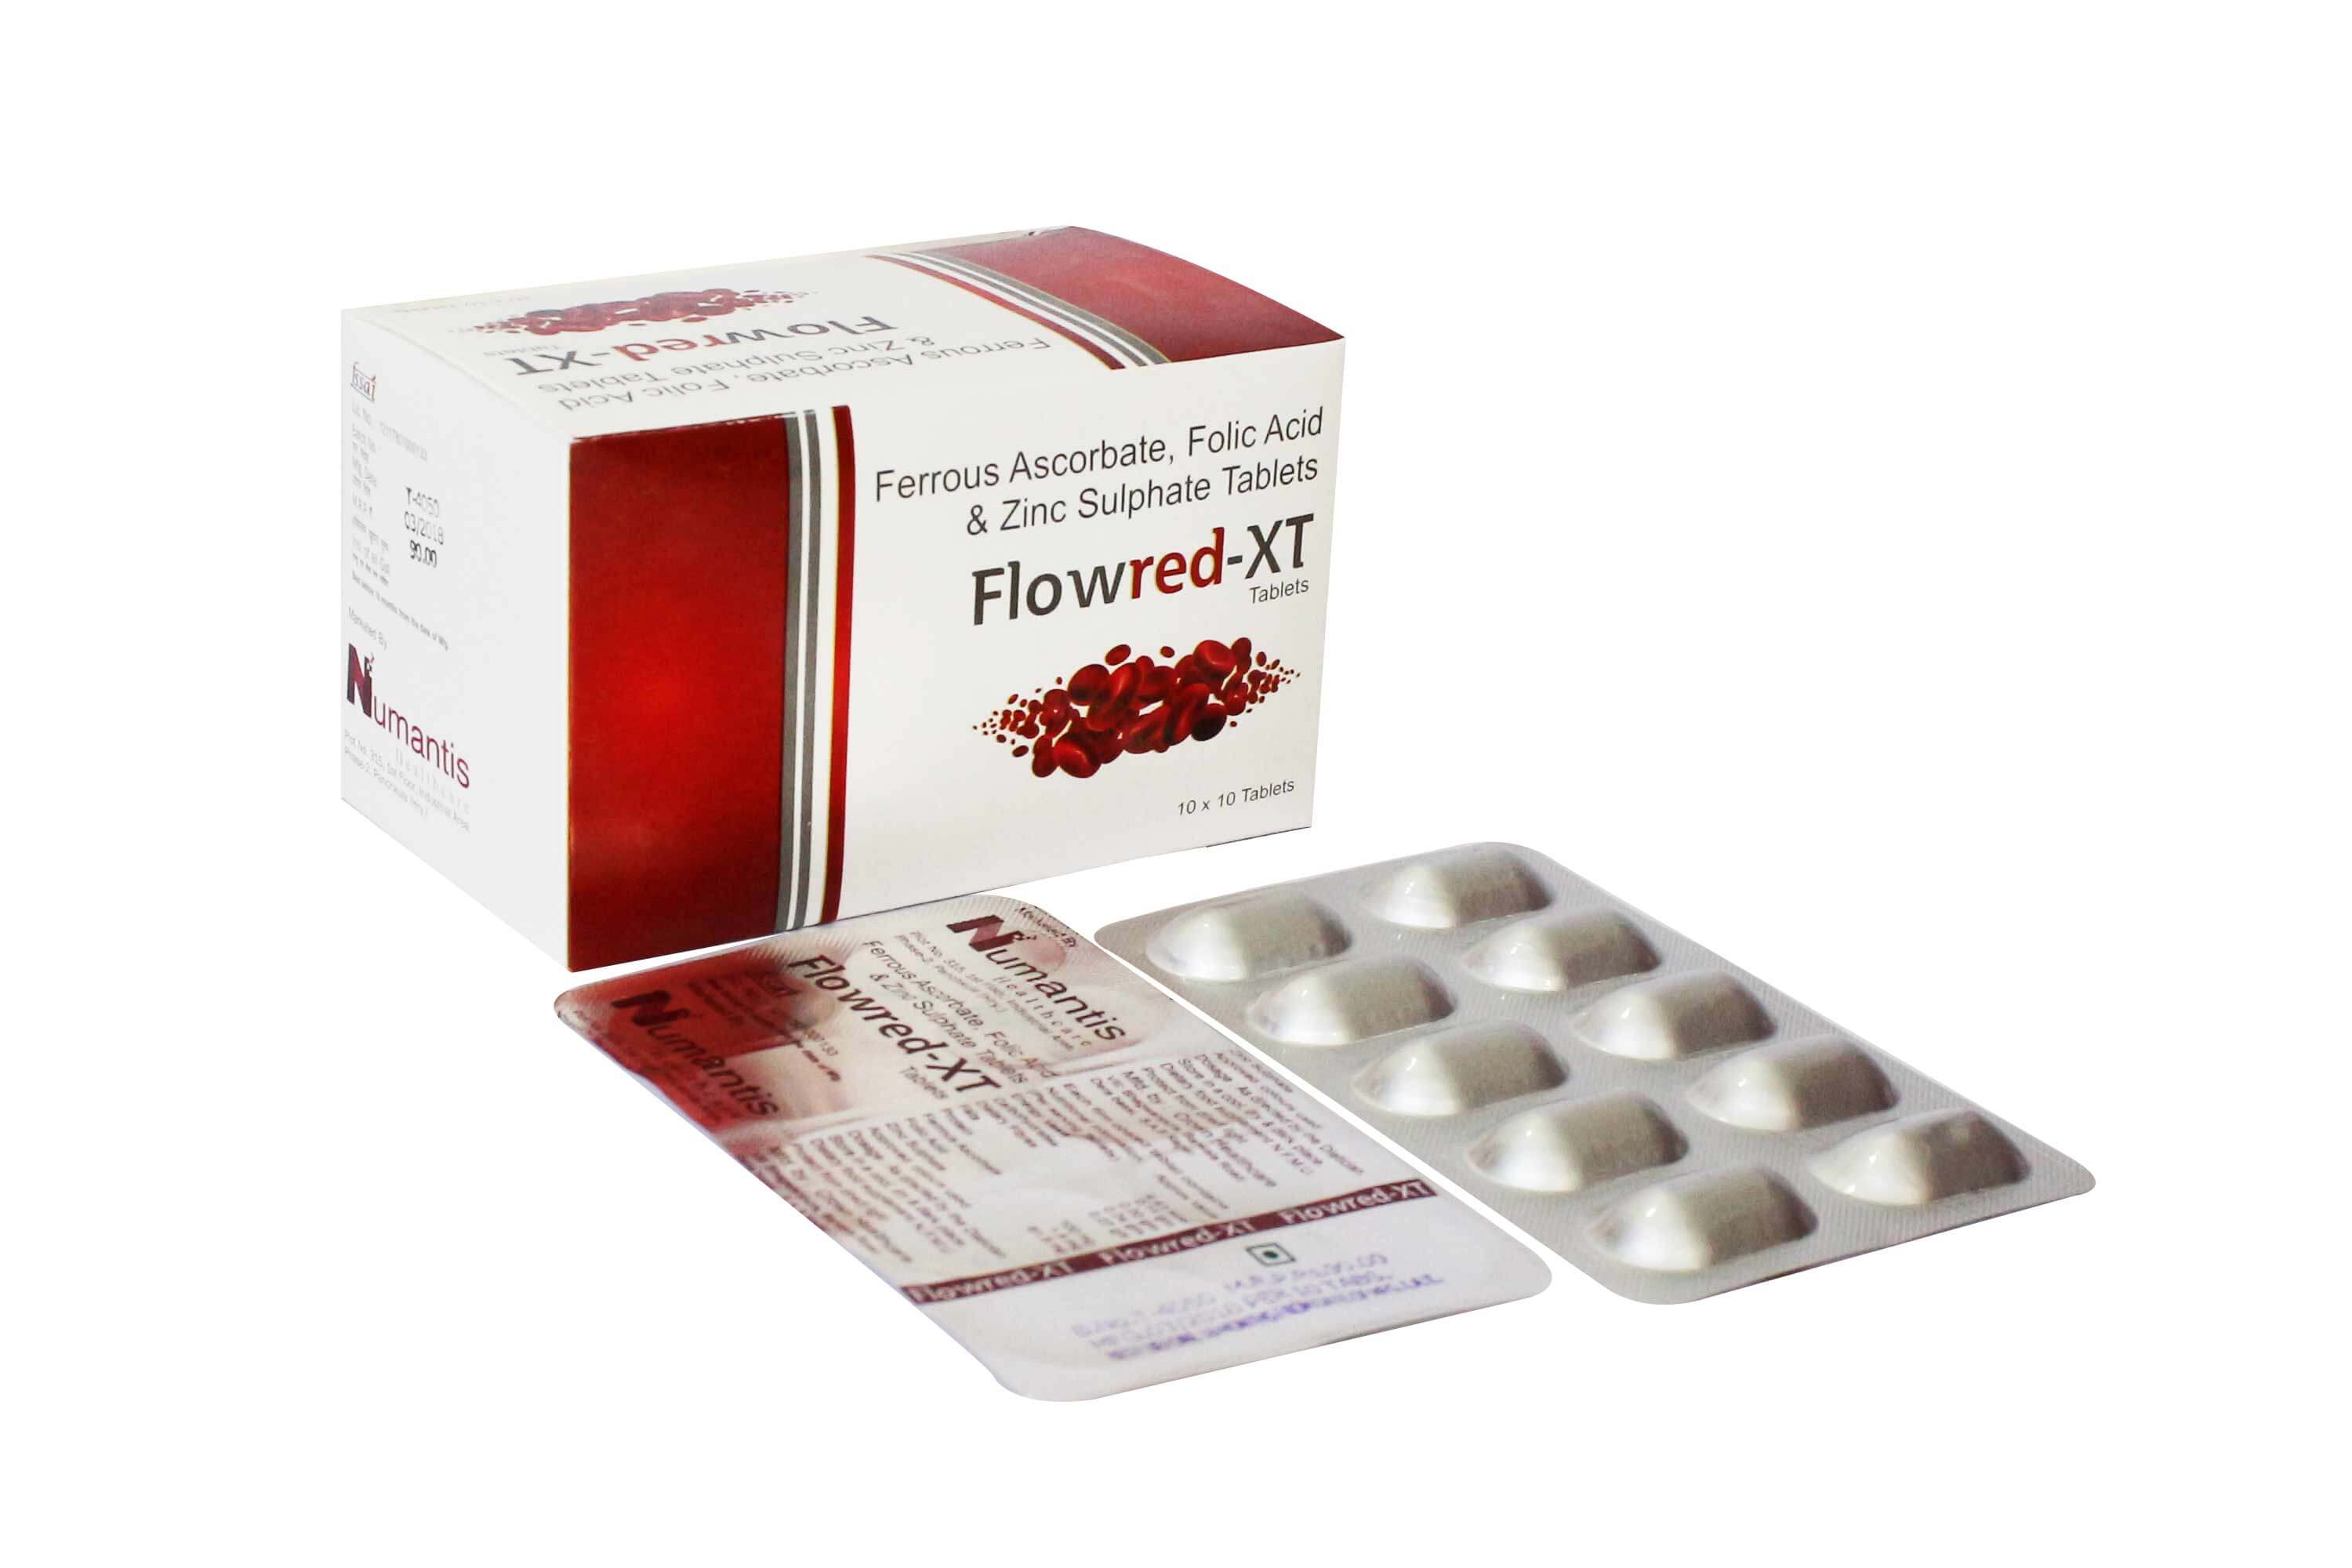 Product Name: Flowred XT, Compositions of Flowred XT are Ferrous Asrobate Folic Acid & Zinc Sulphate Tablets - Numantis Healthcare